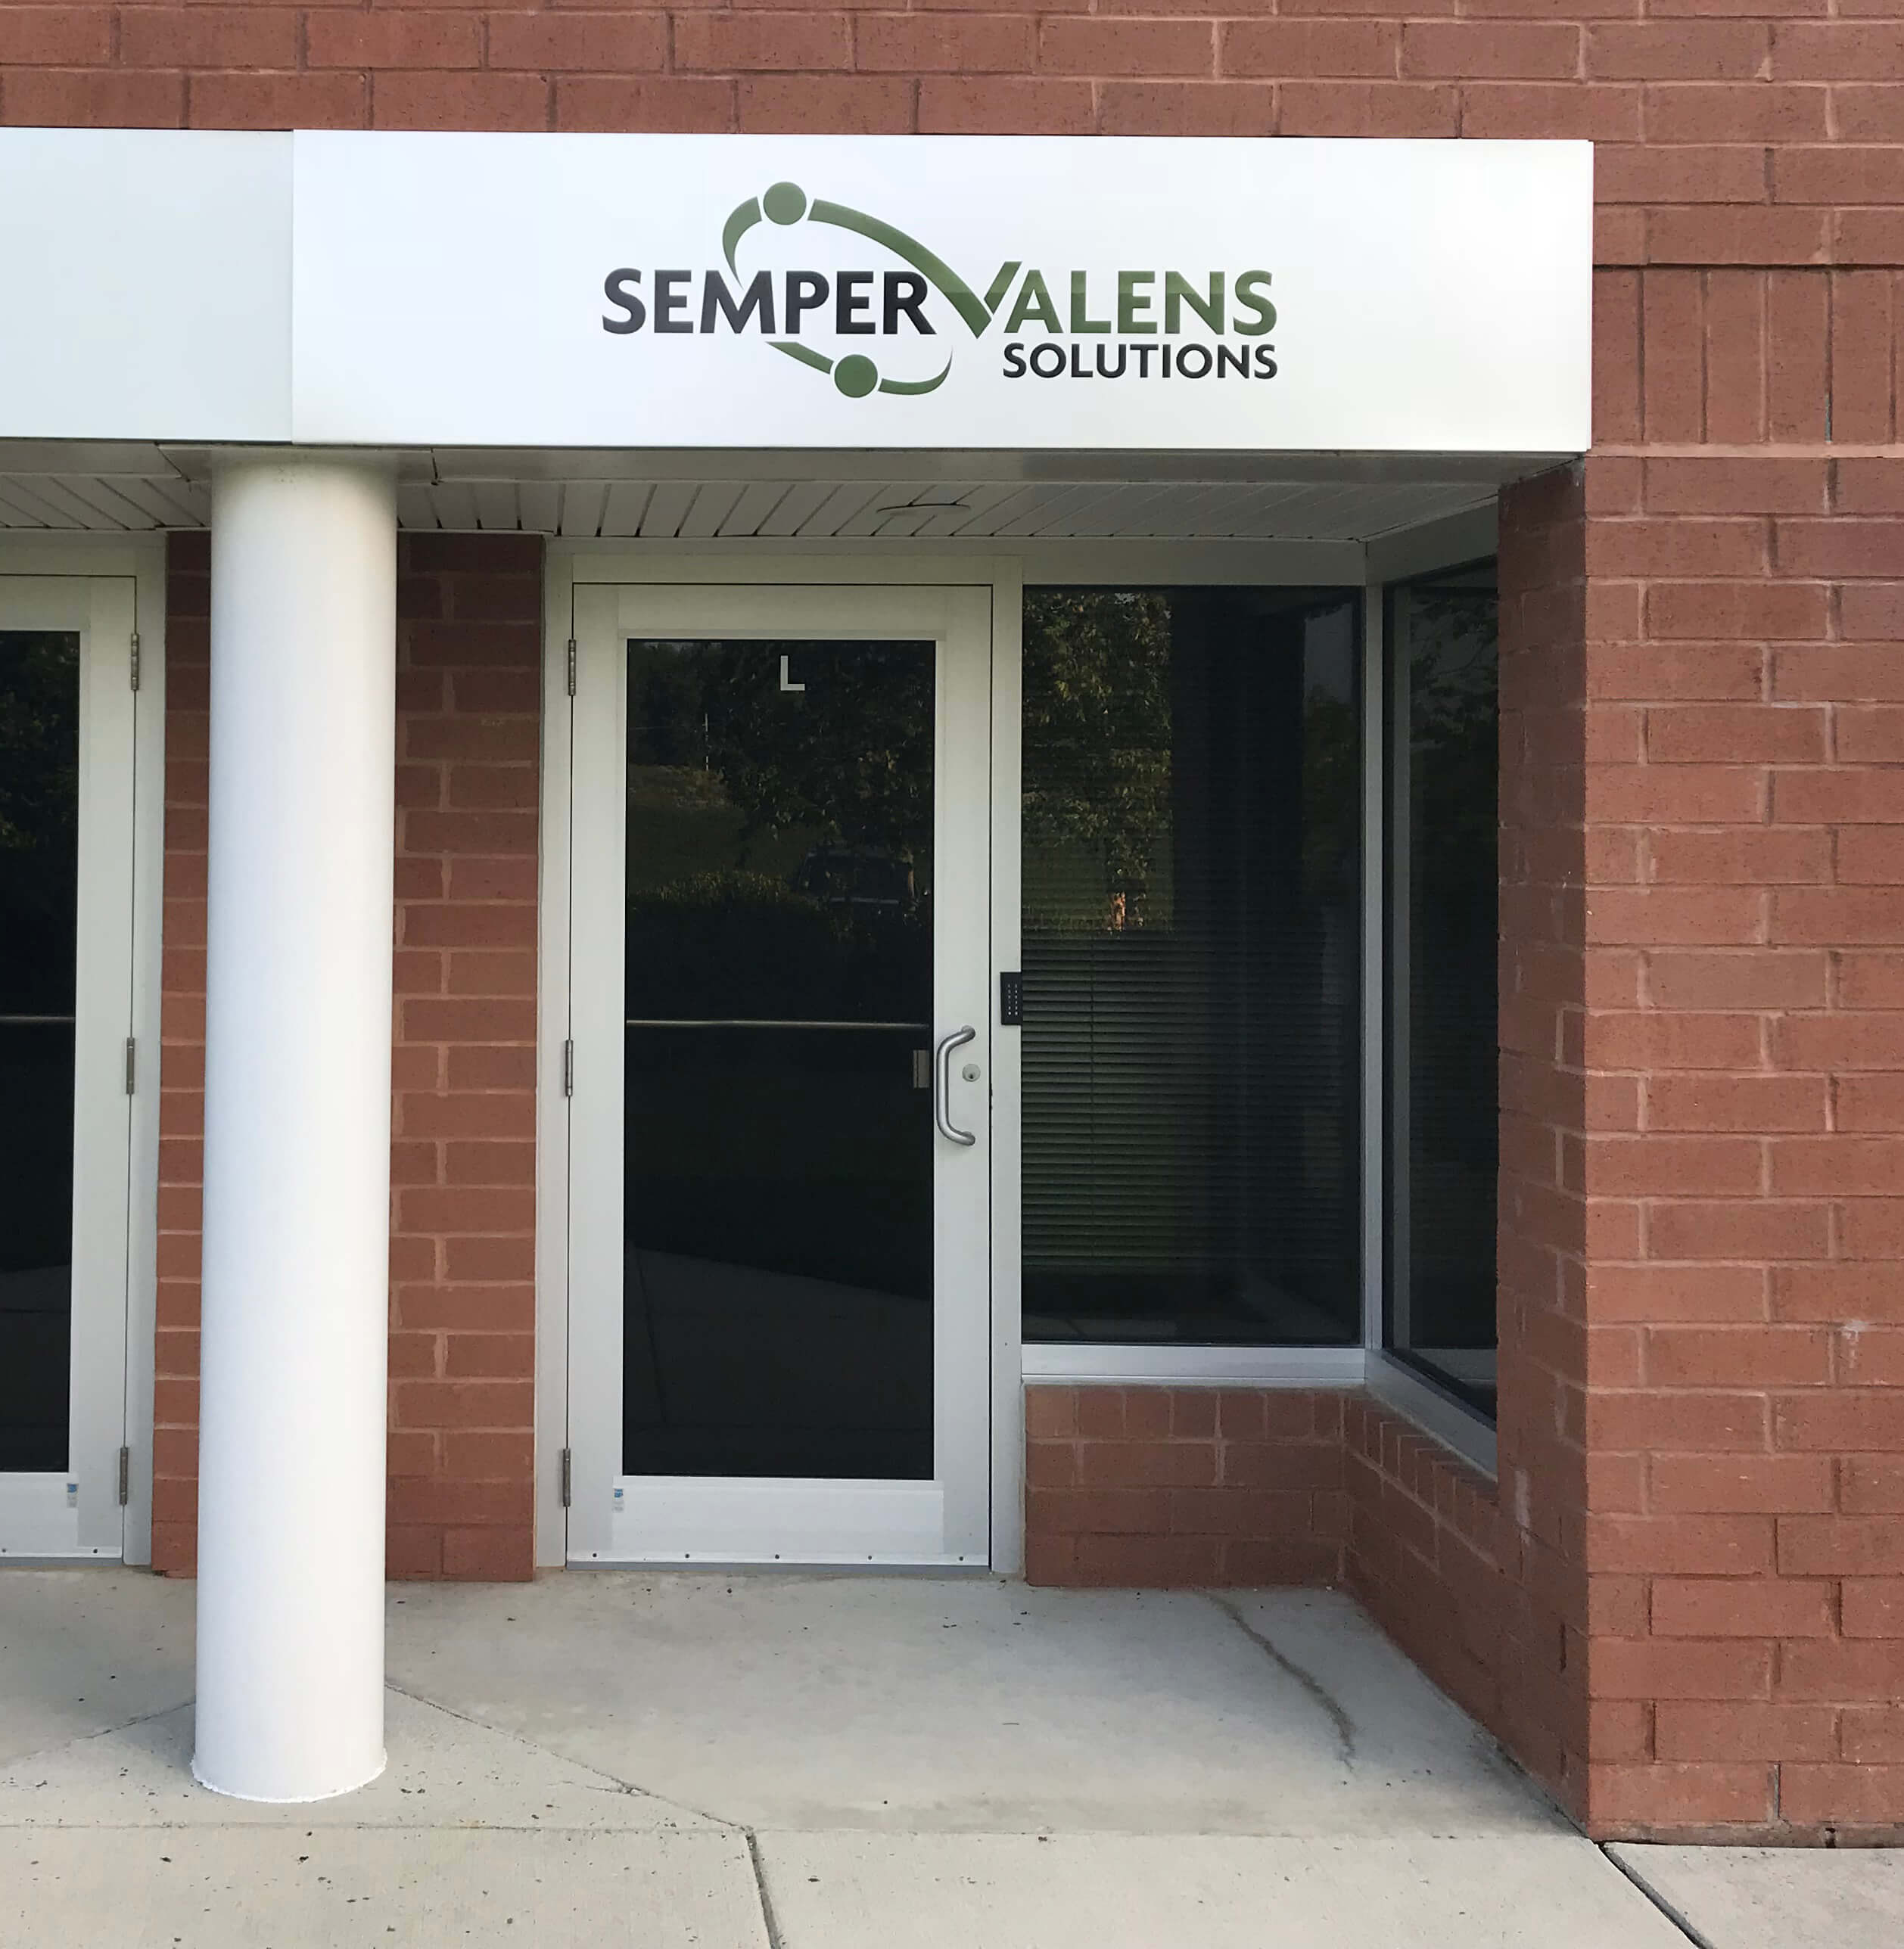 Semper Valens Solutions outdoor sign